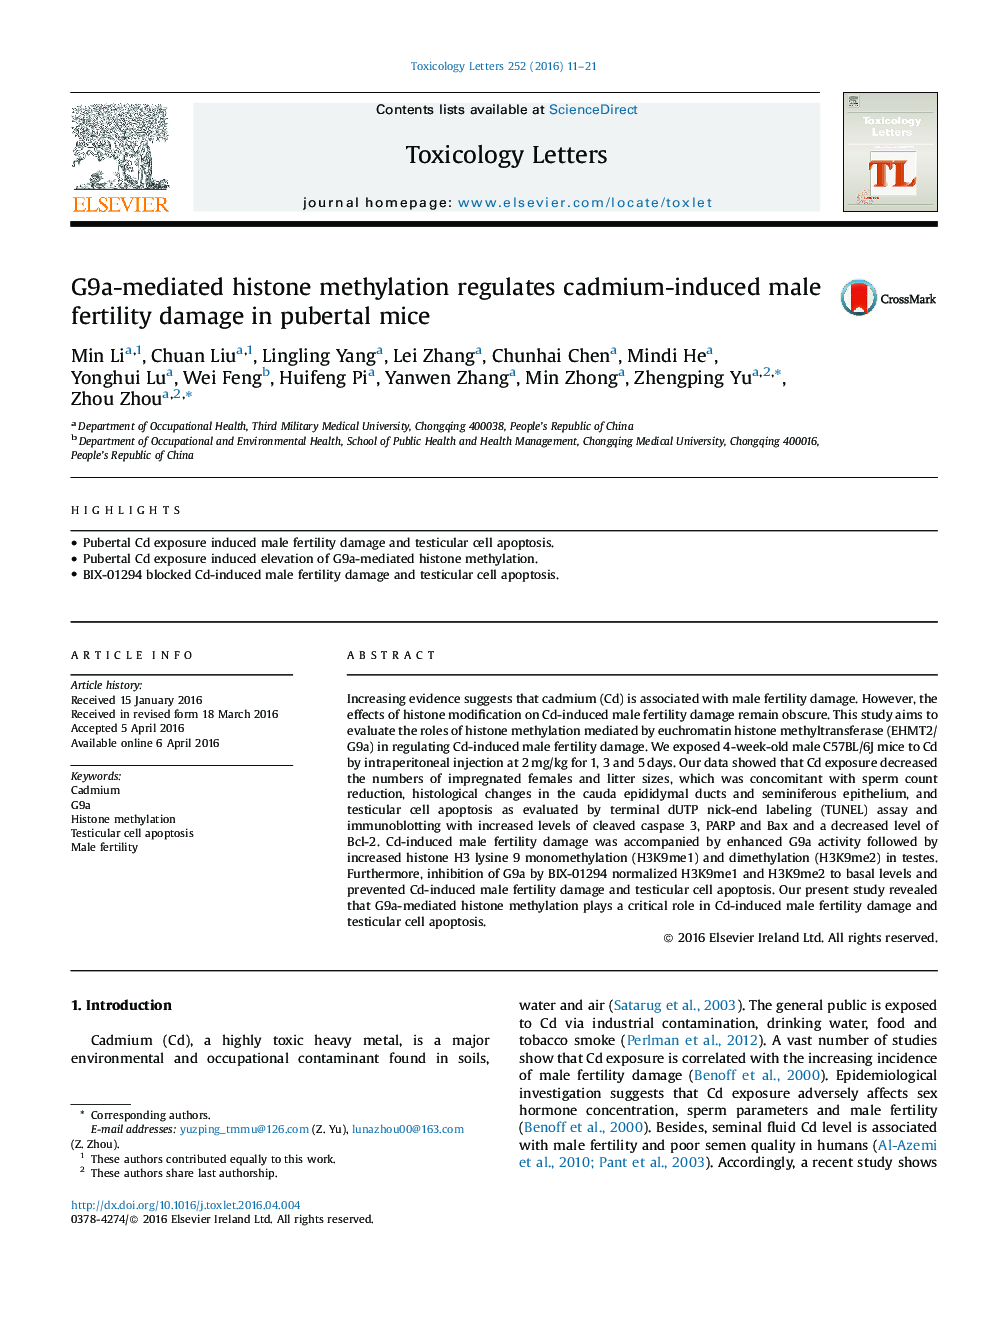 G9a-mediated histone methylation regulates cadmium-induced male fertility damage in pubertal mice